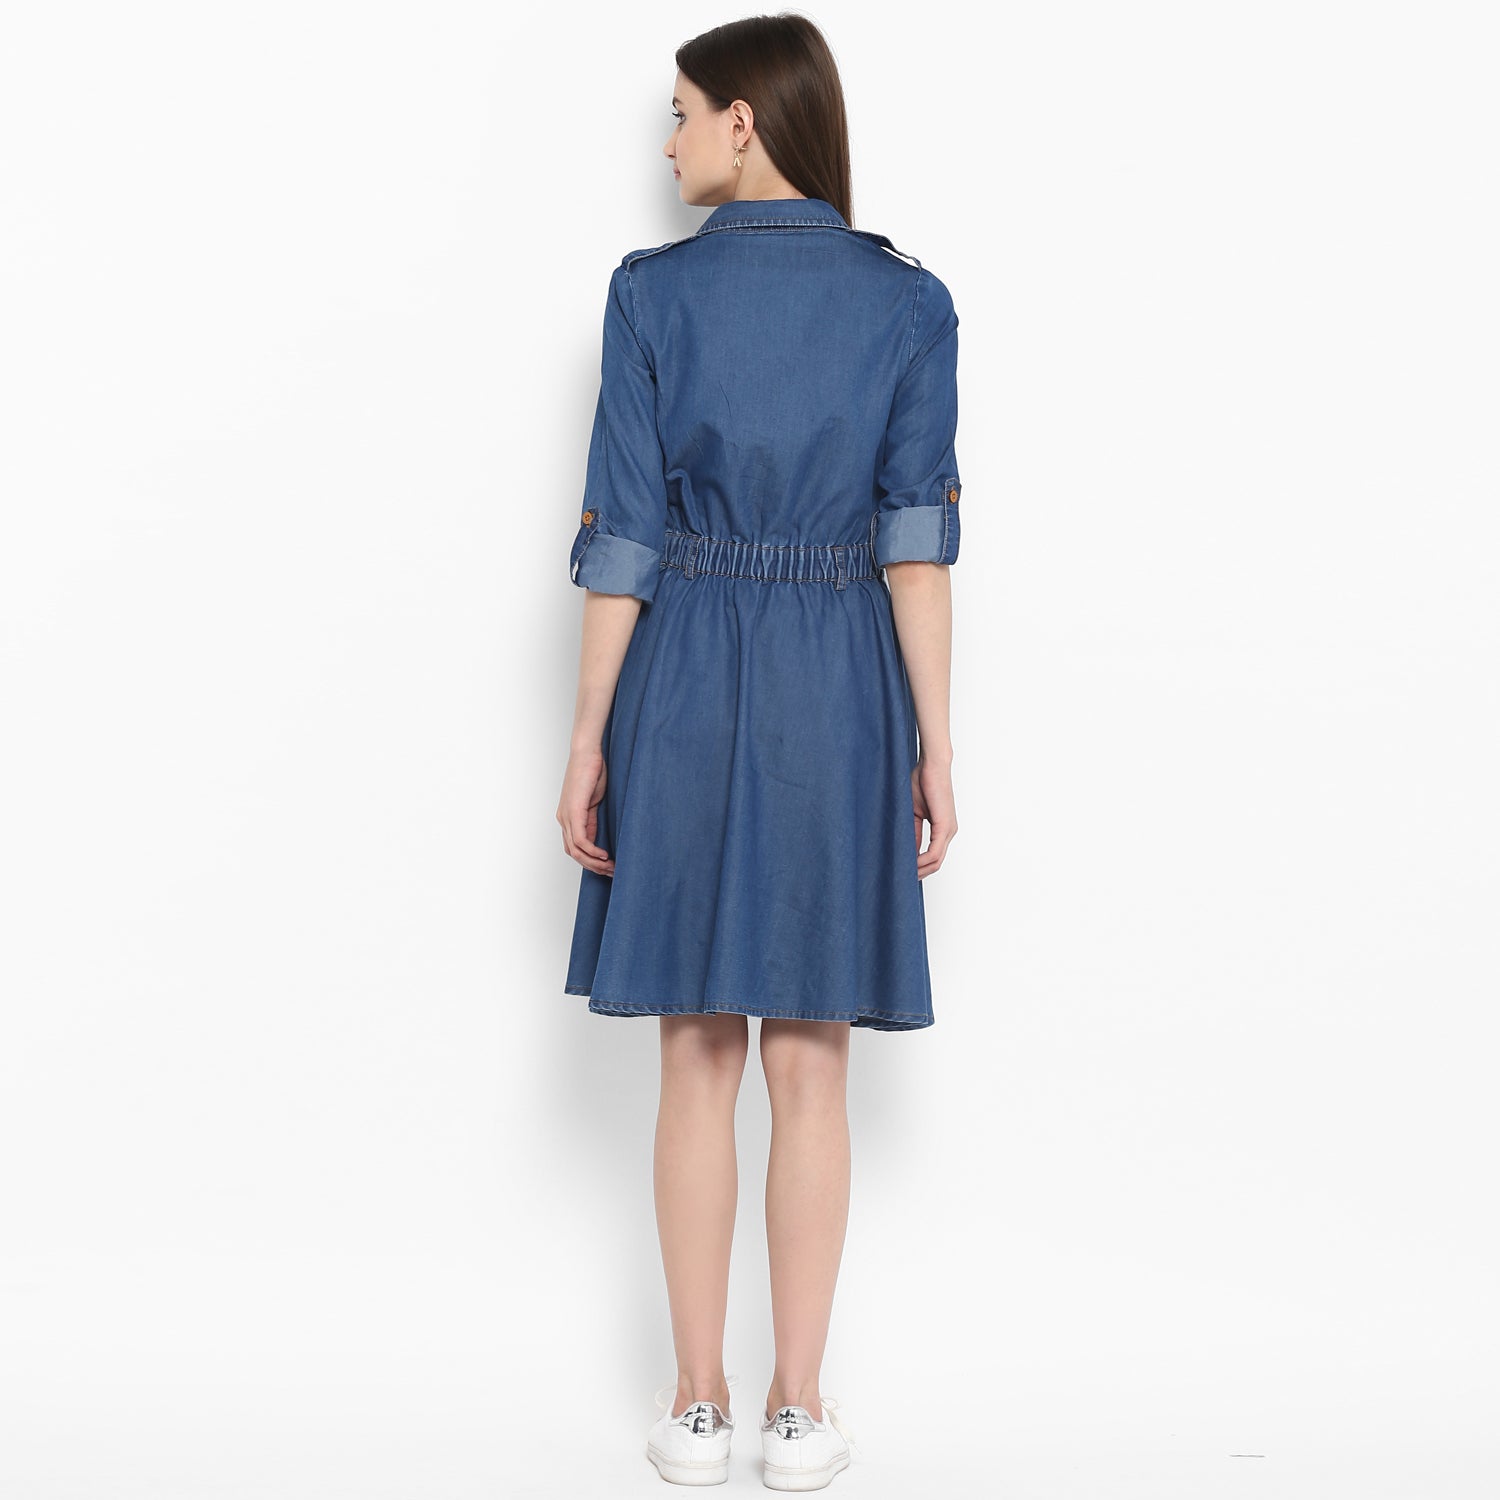 Women's Denim Knee Length Dress with Buttons - StyleStone